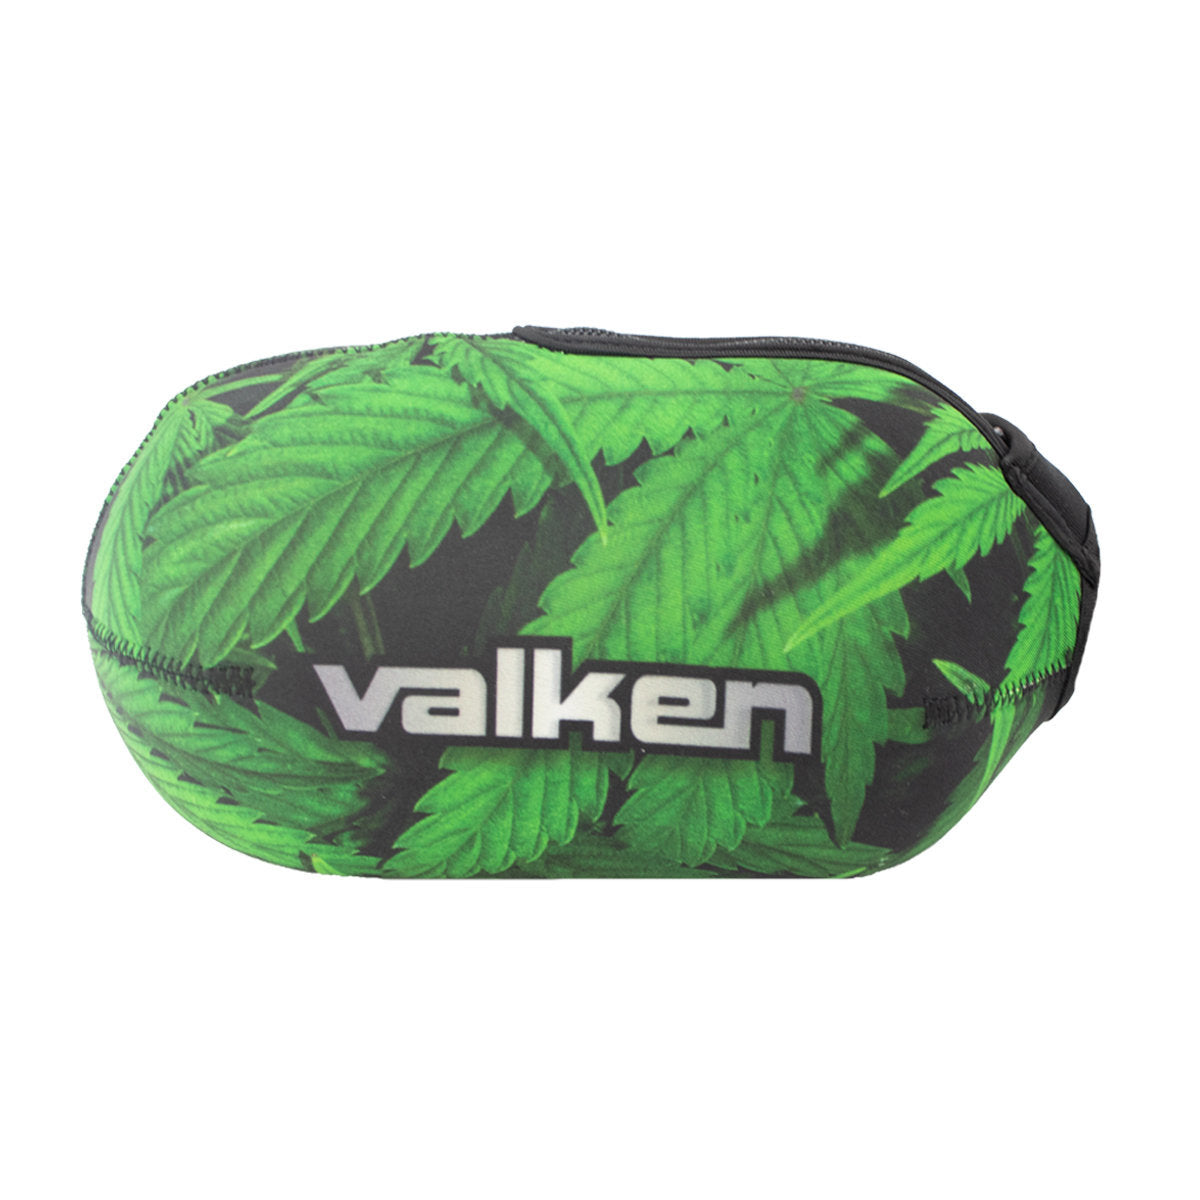 Valken Fate Gfx Tank Cover - Plants Green